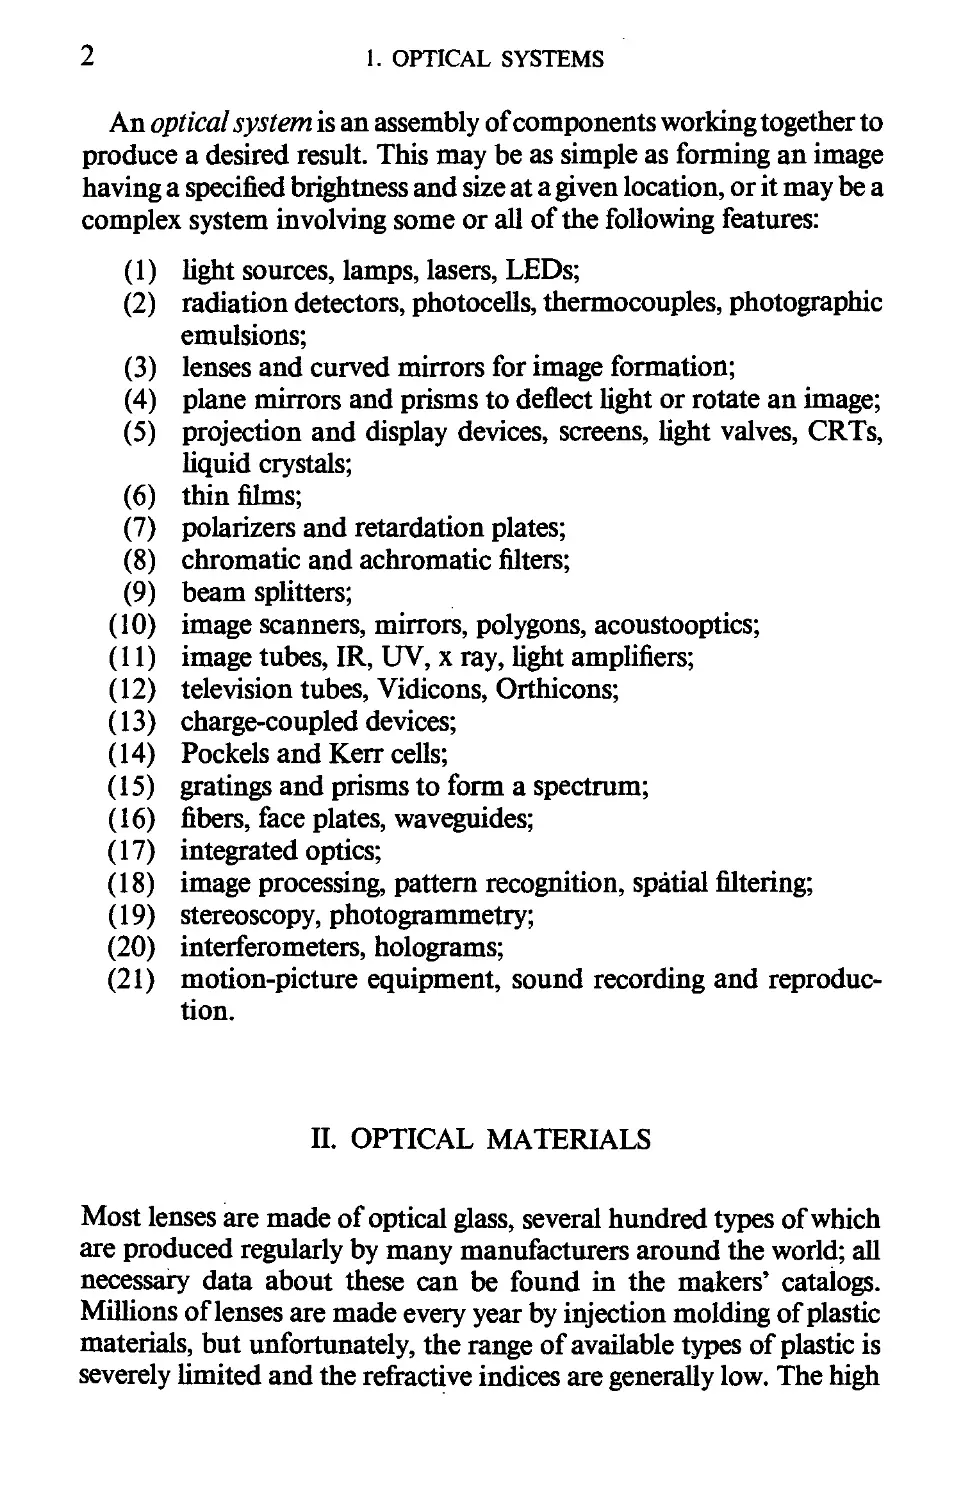 II. Optical Materials